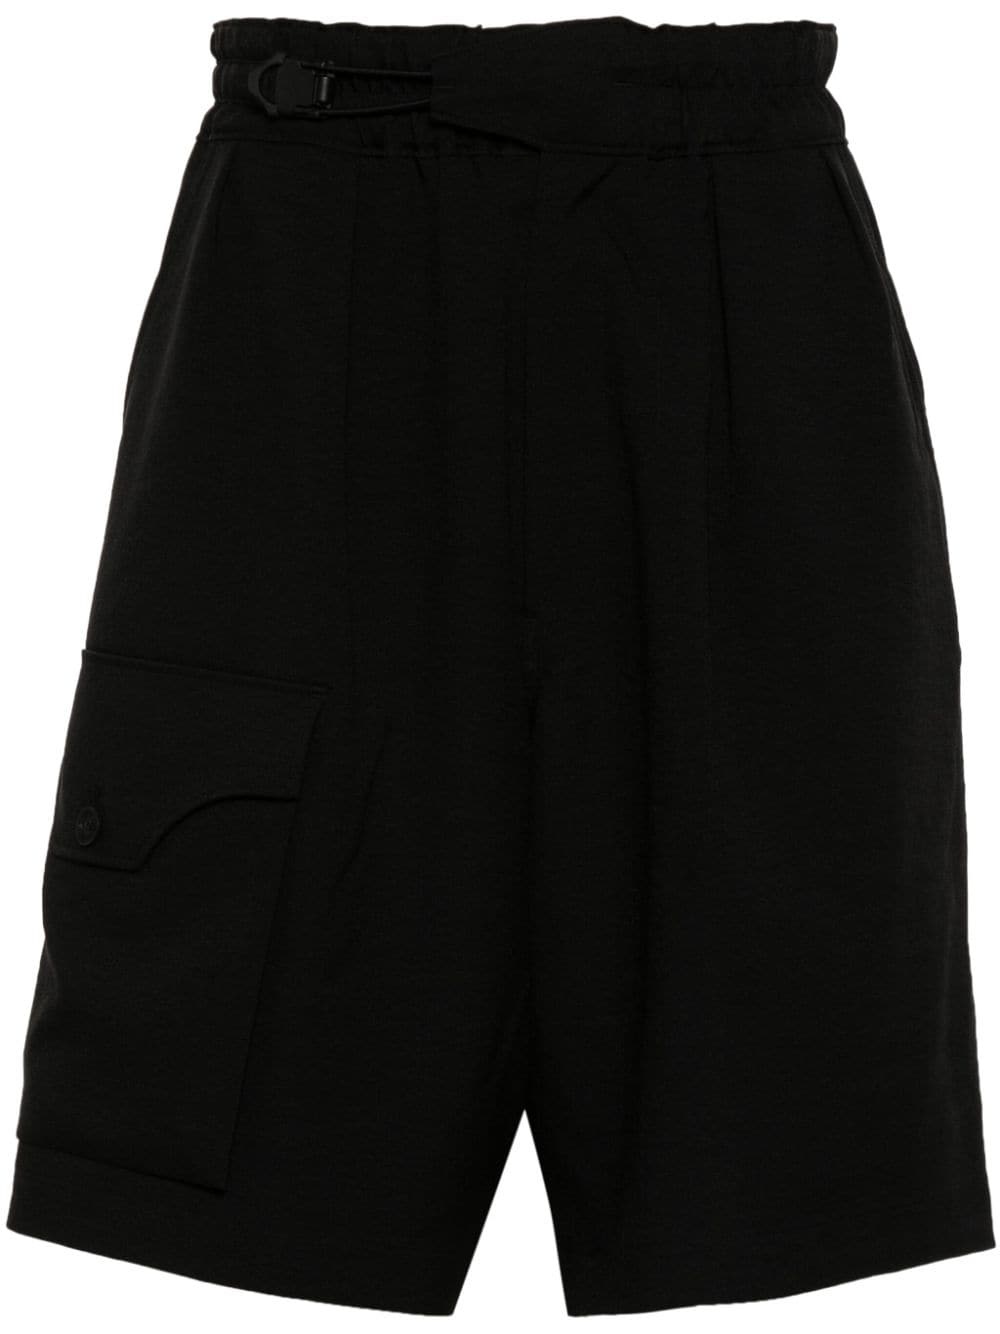 Sport Uniform shorts - 1